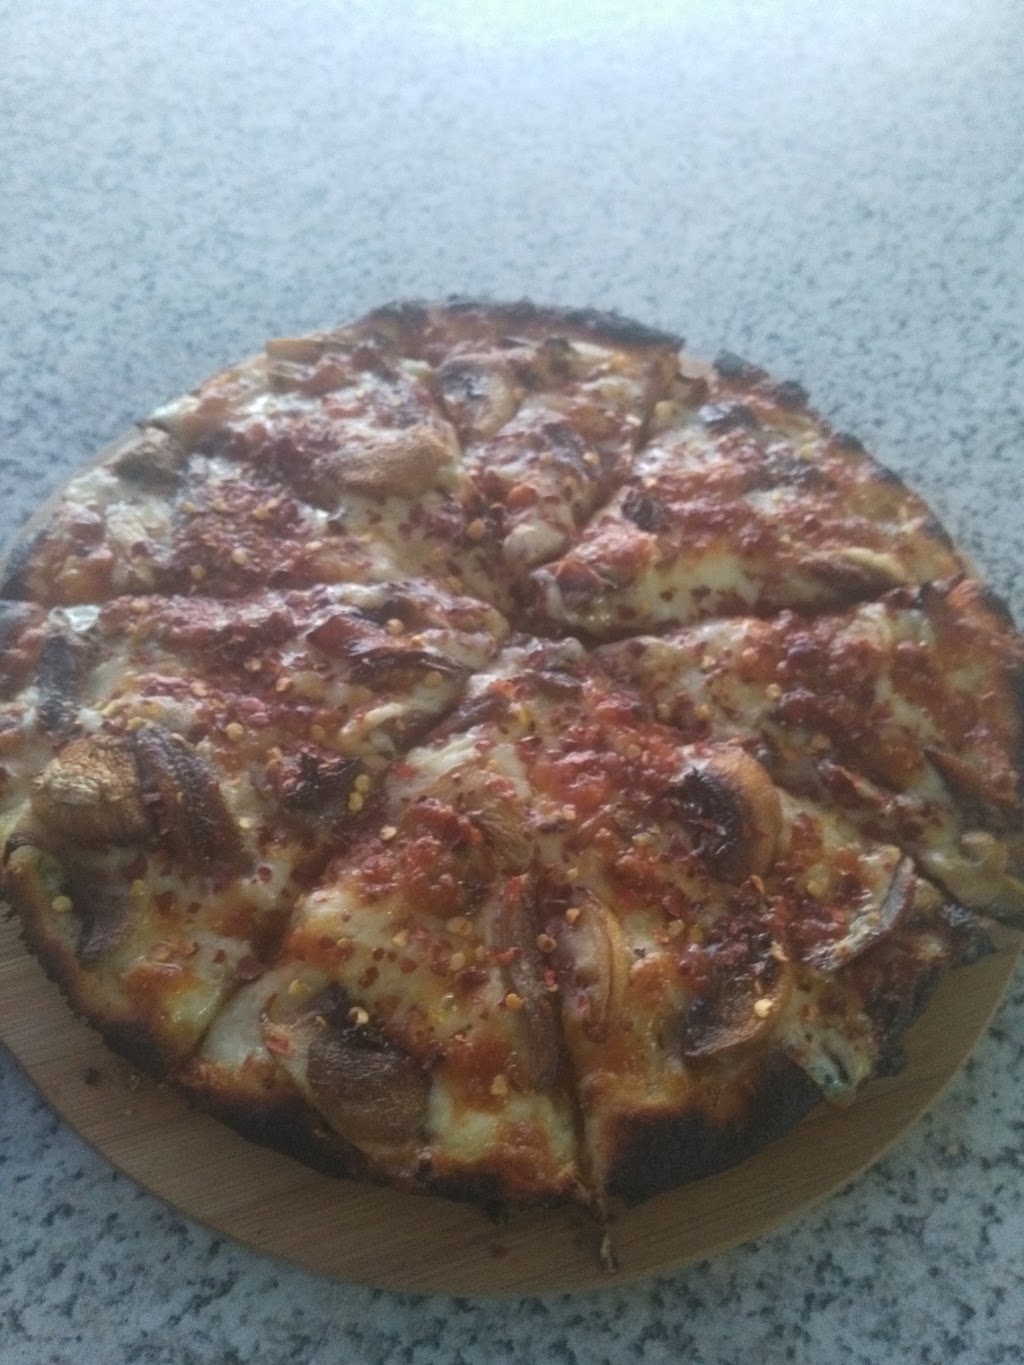 Pompeos Pizza | 46 Binalong Rd, Mornington TAS 7018, Australia | Phone: (03) 6244 4720